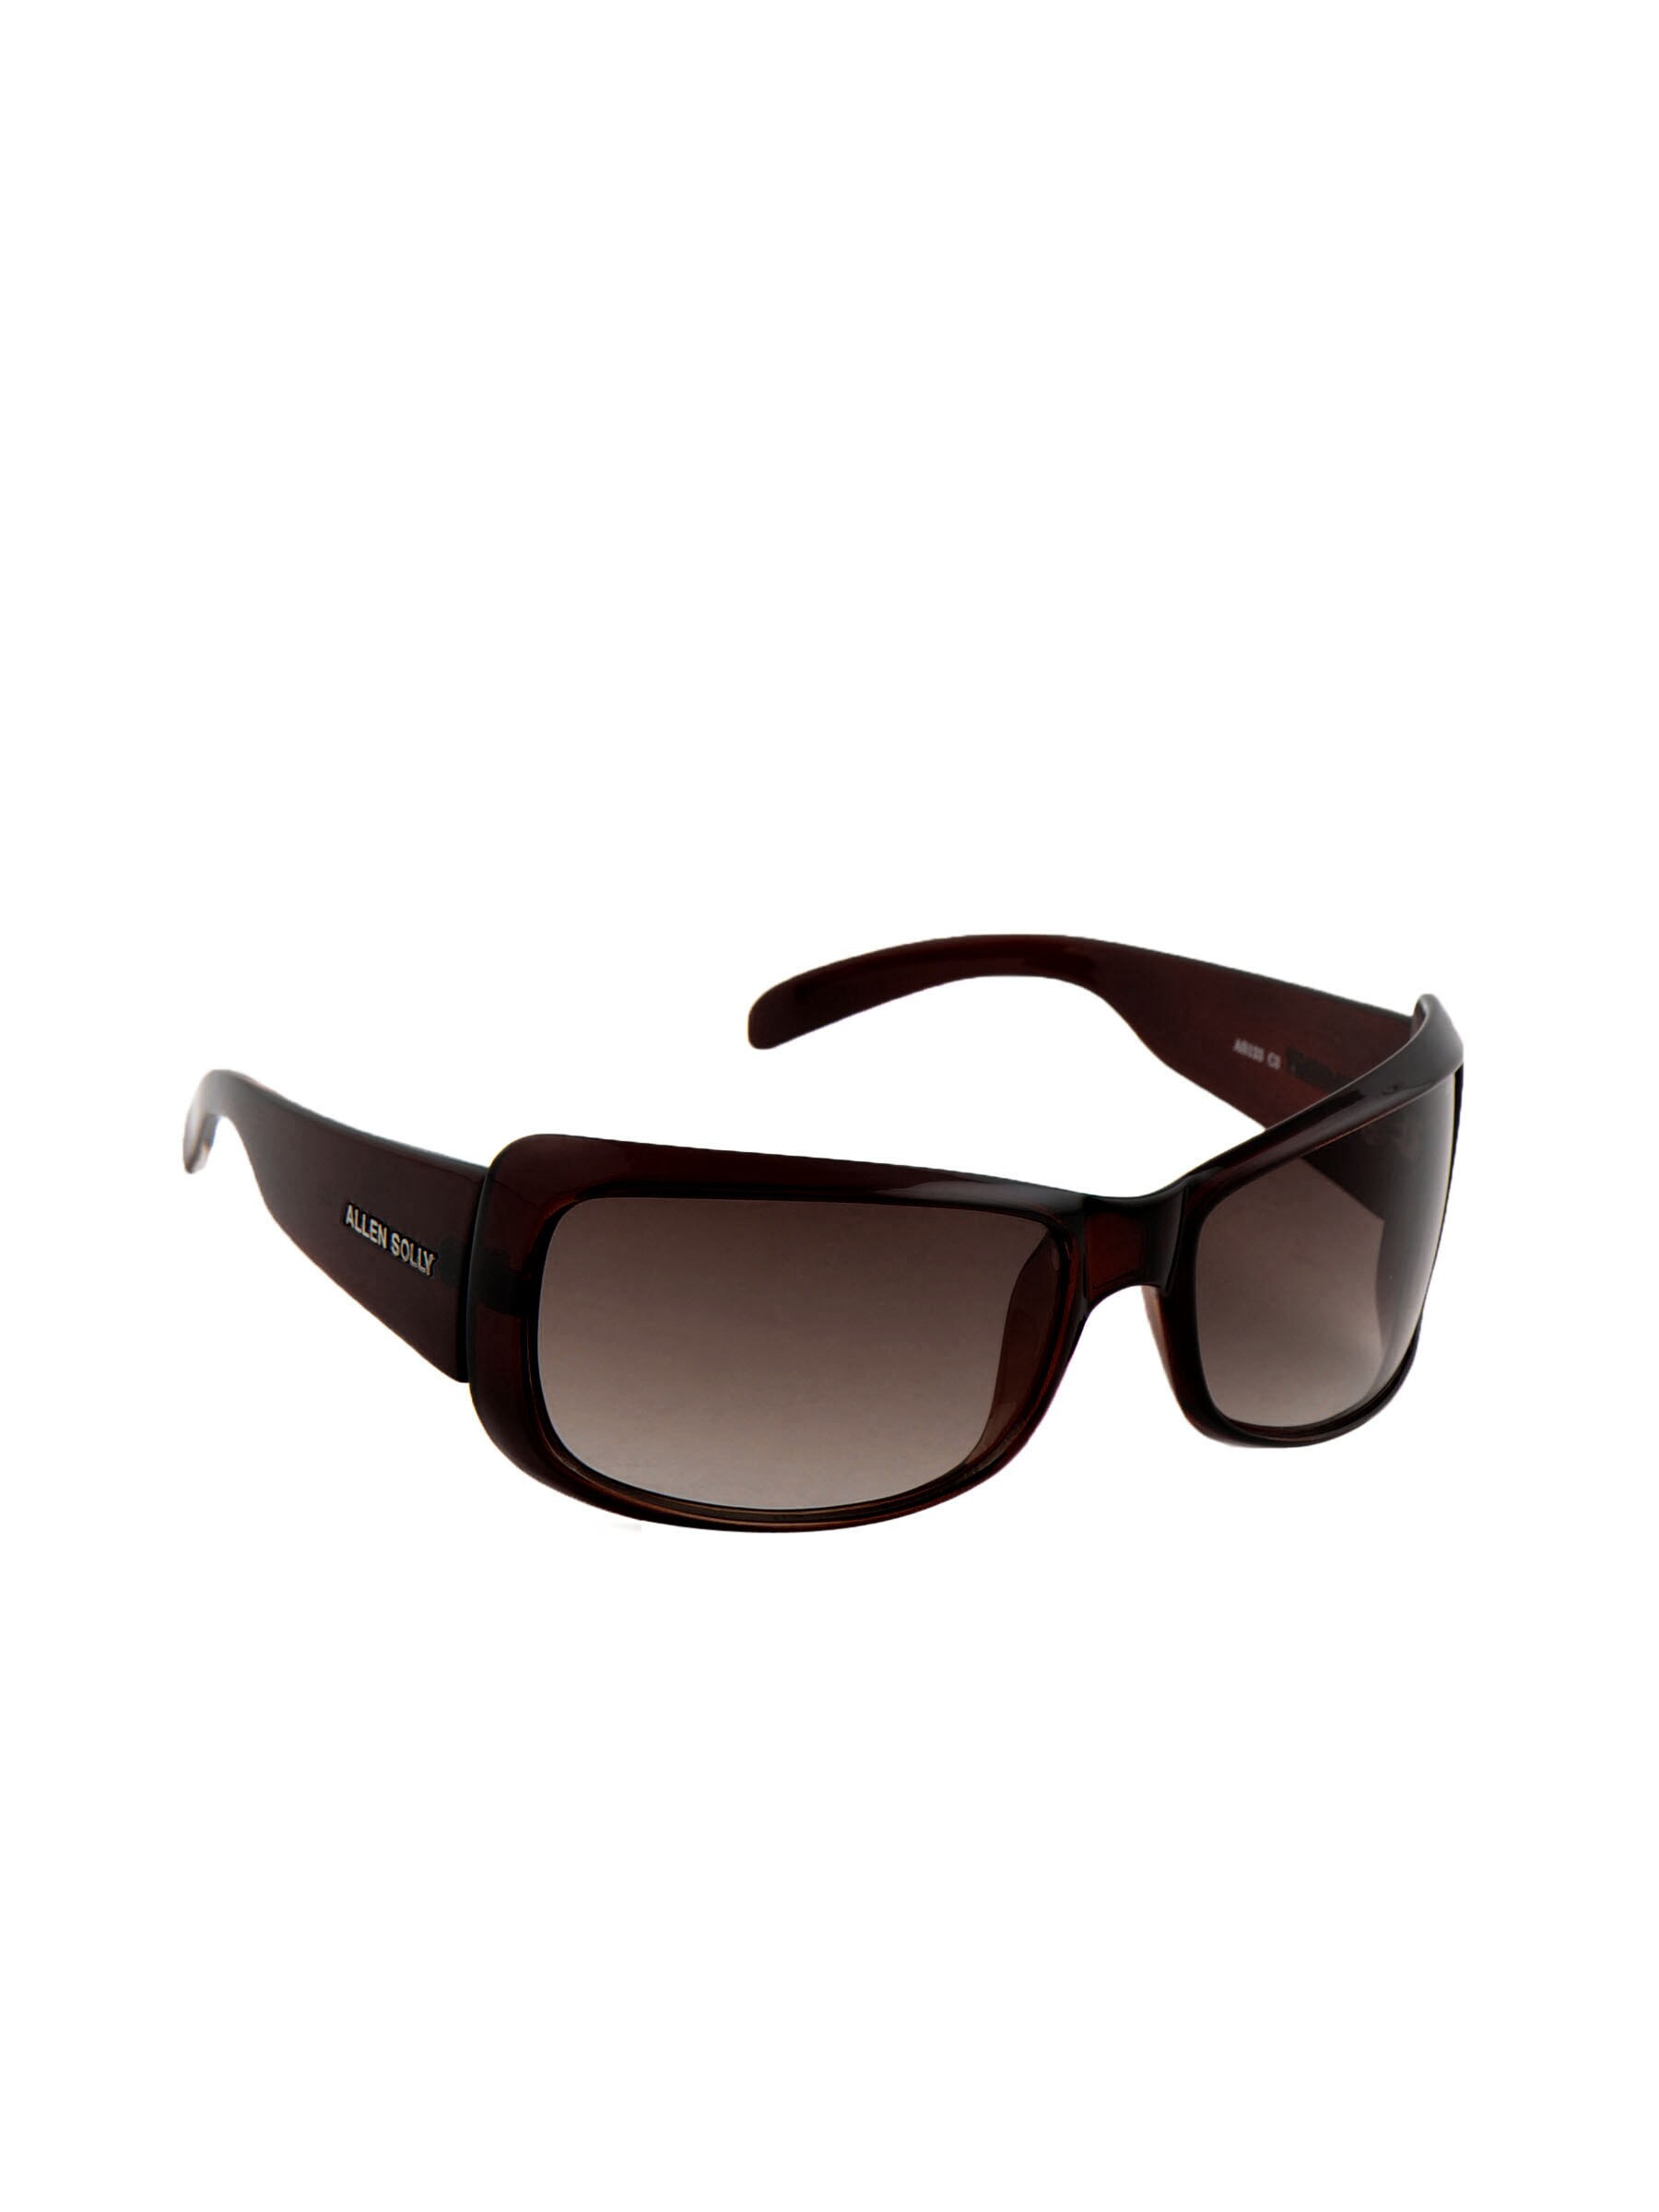 Allen Solly Unisex Sunglasses AS123-C3